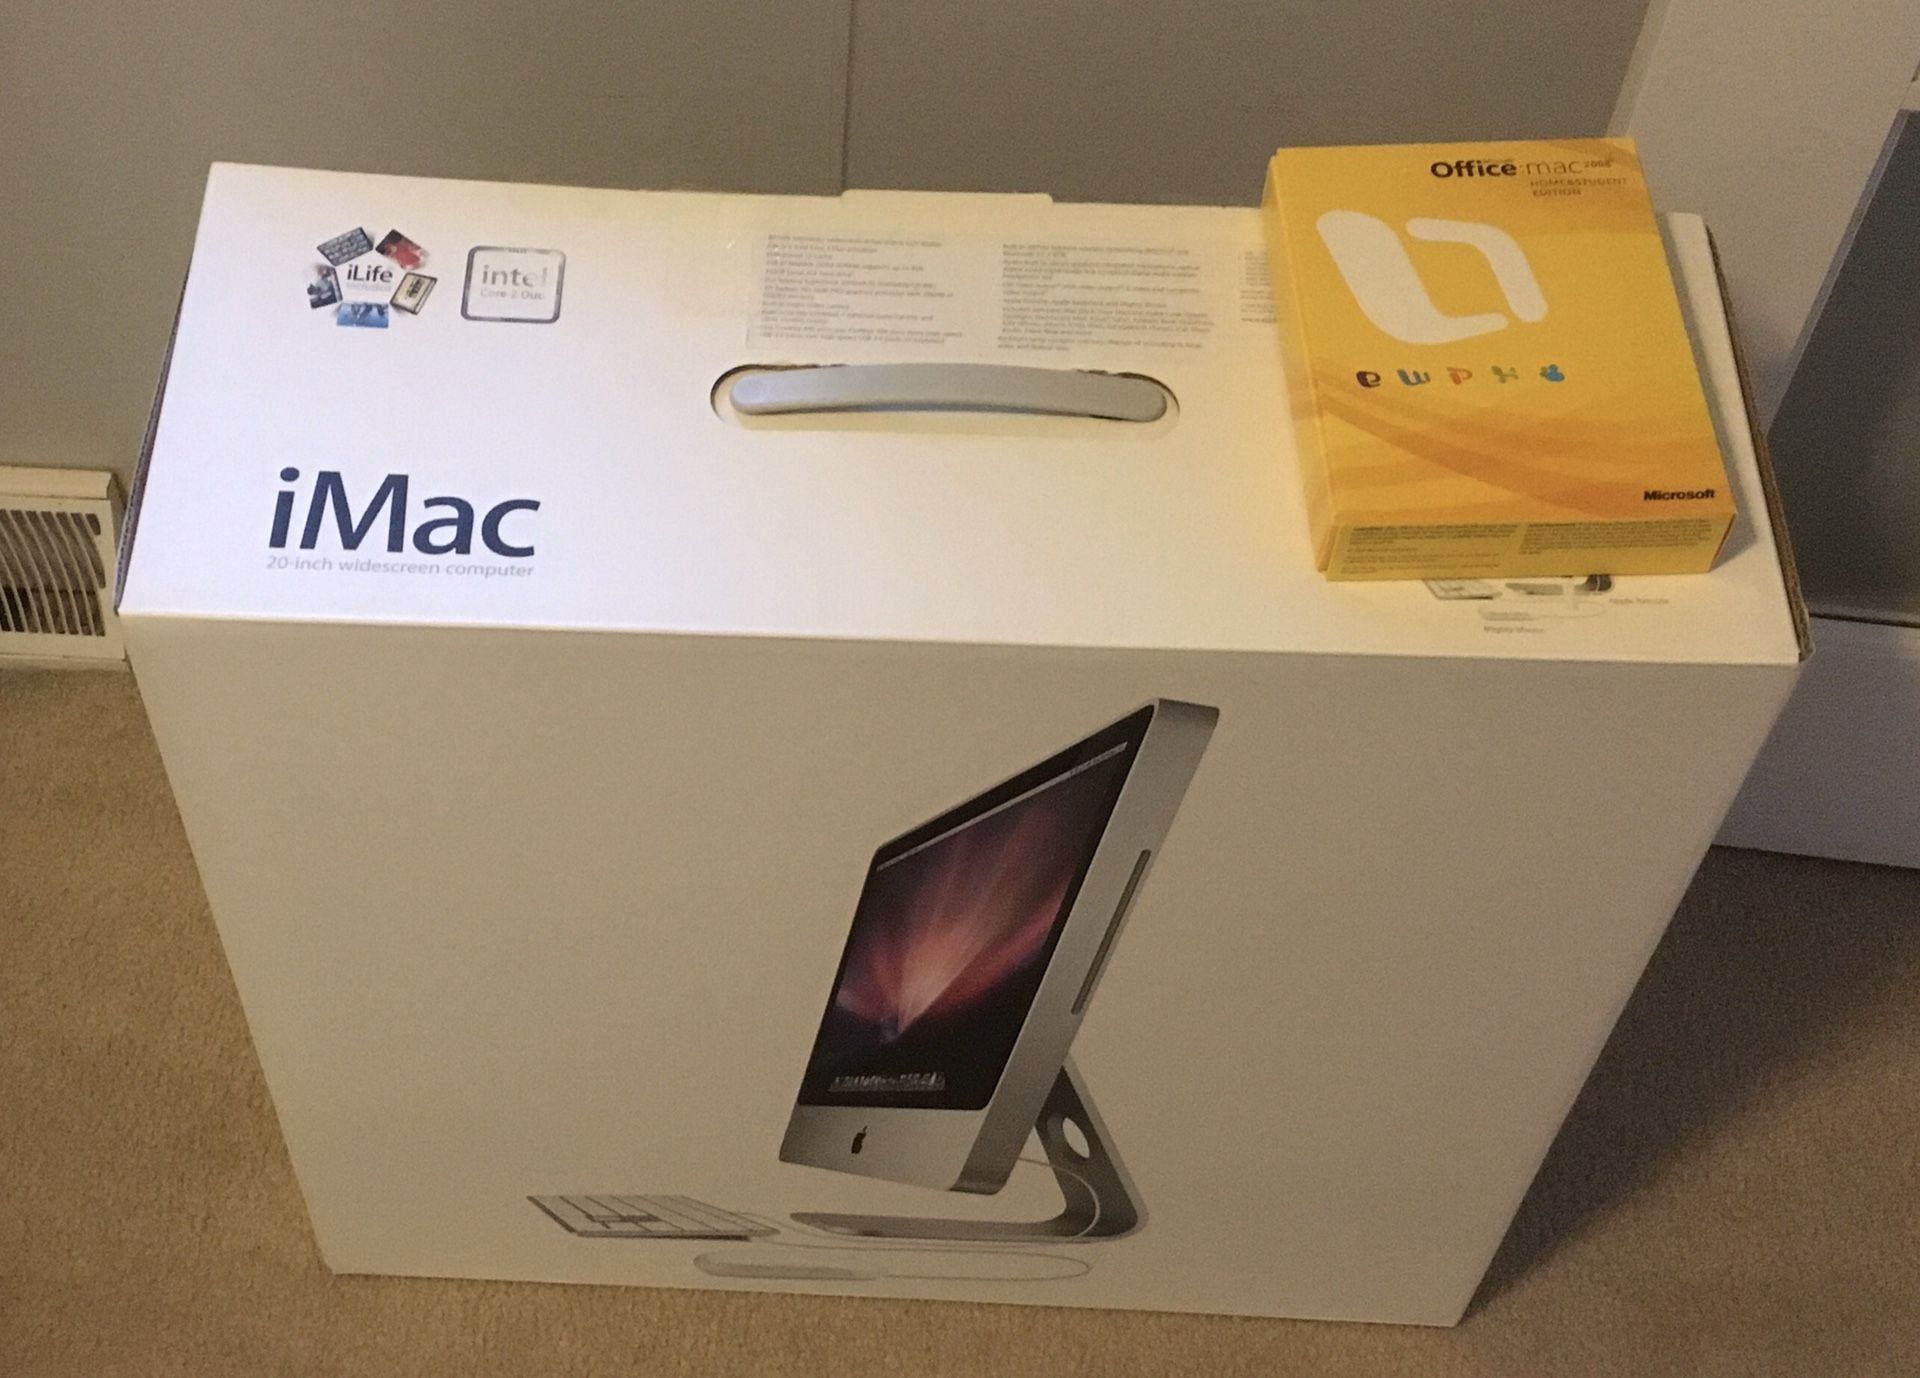 iMac + MS Office for Macs